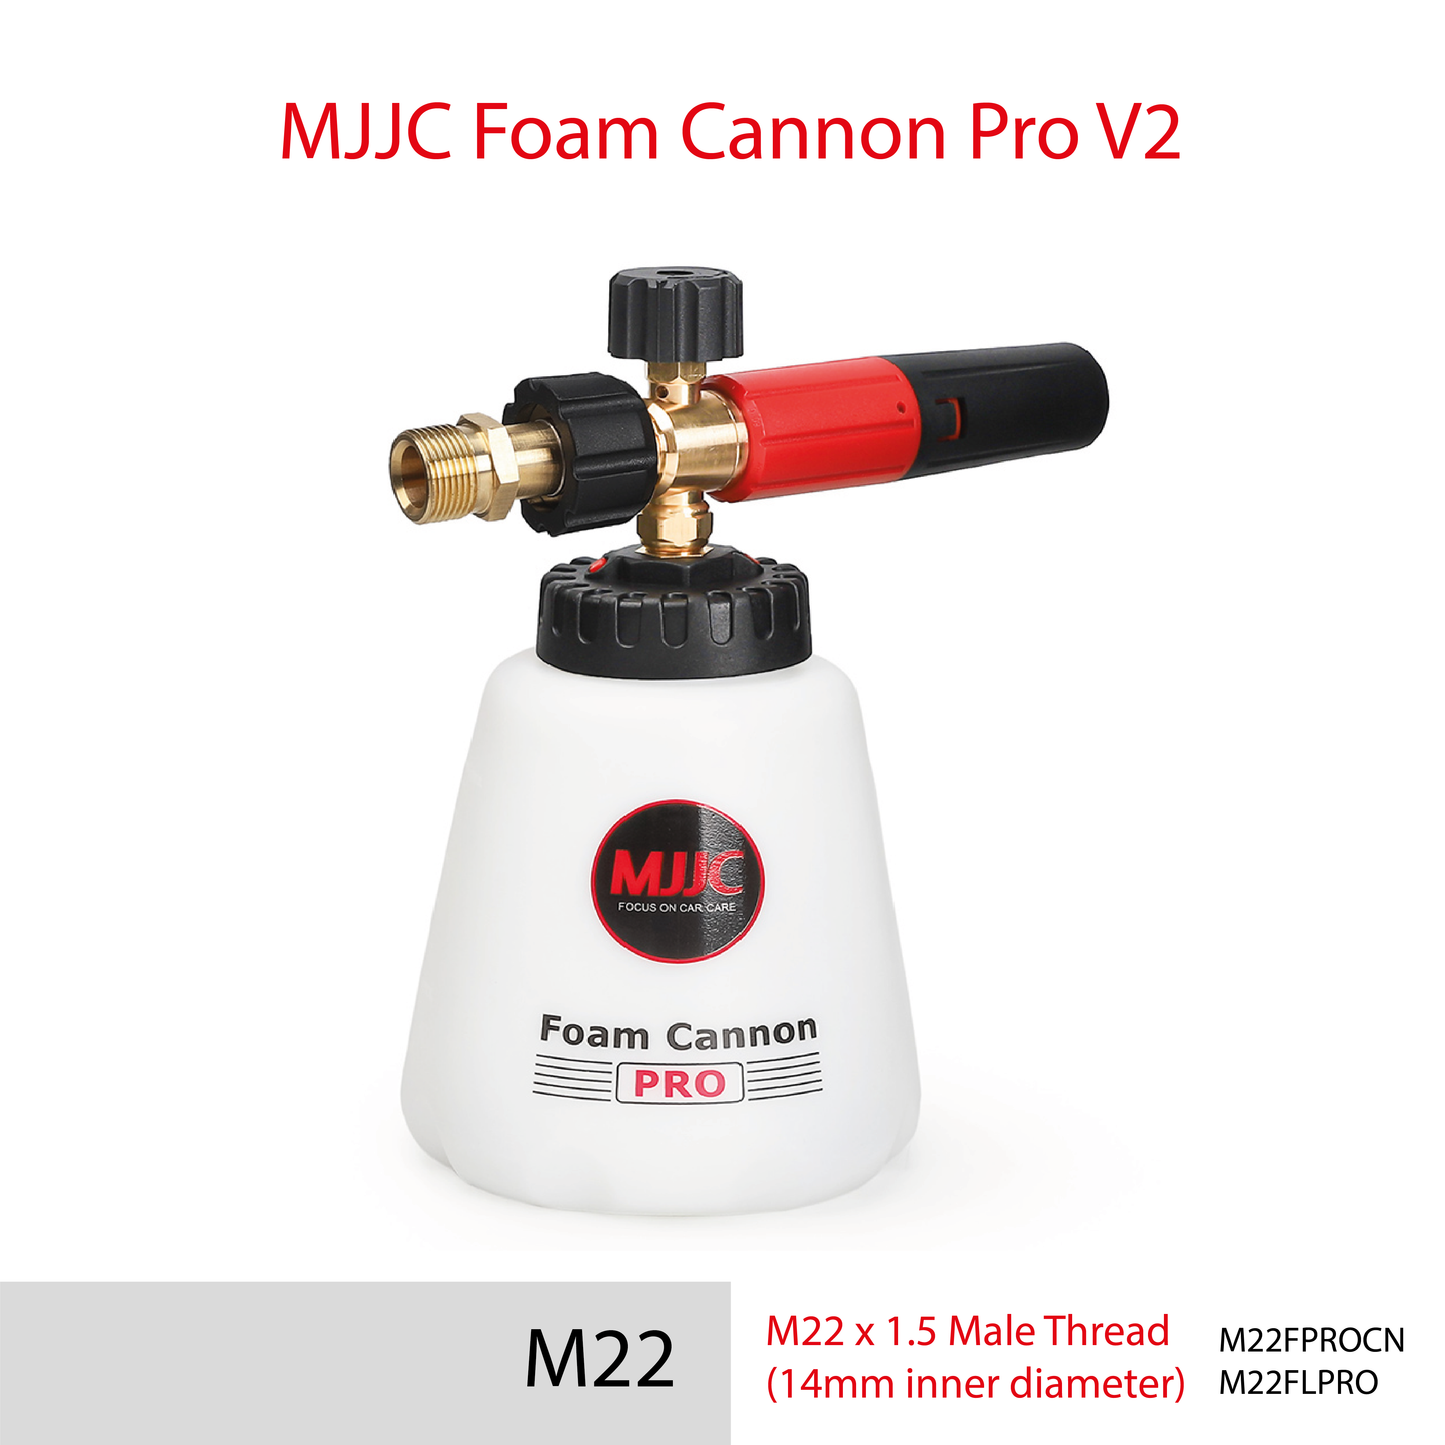 M22 x 1.5 Male Thread pressure washer - MJJC Foam Cannon Pro V2 (Pressure Washer Snow Foam Lance Gun)